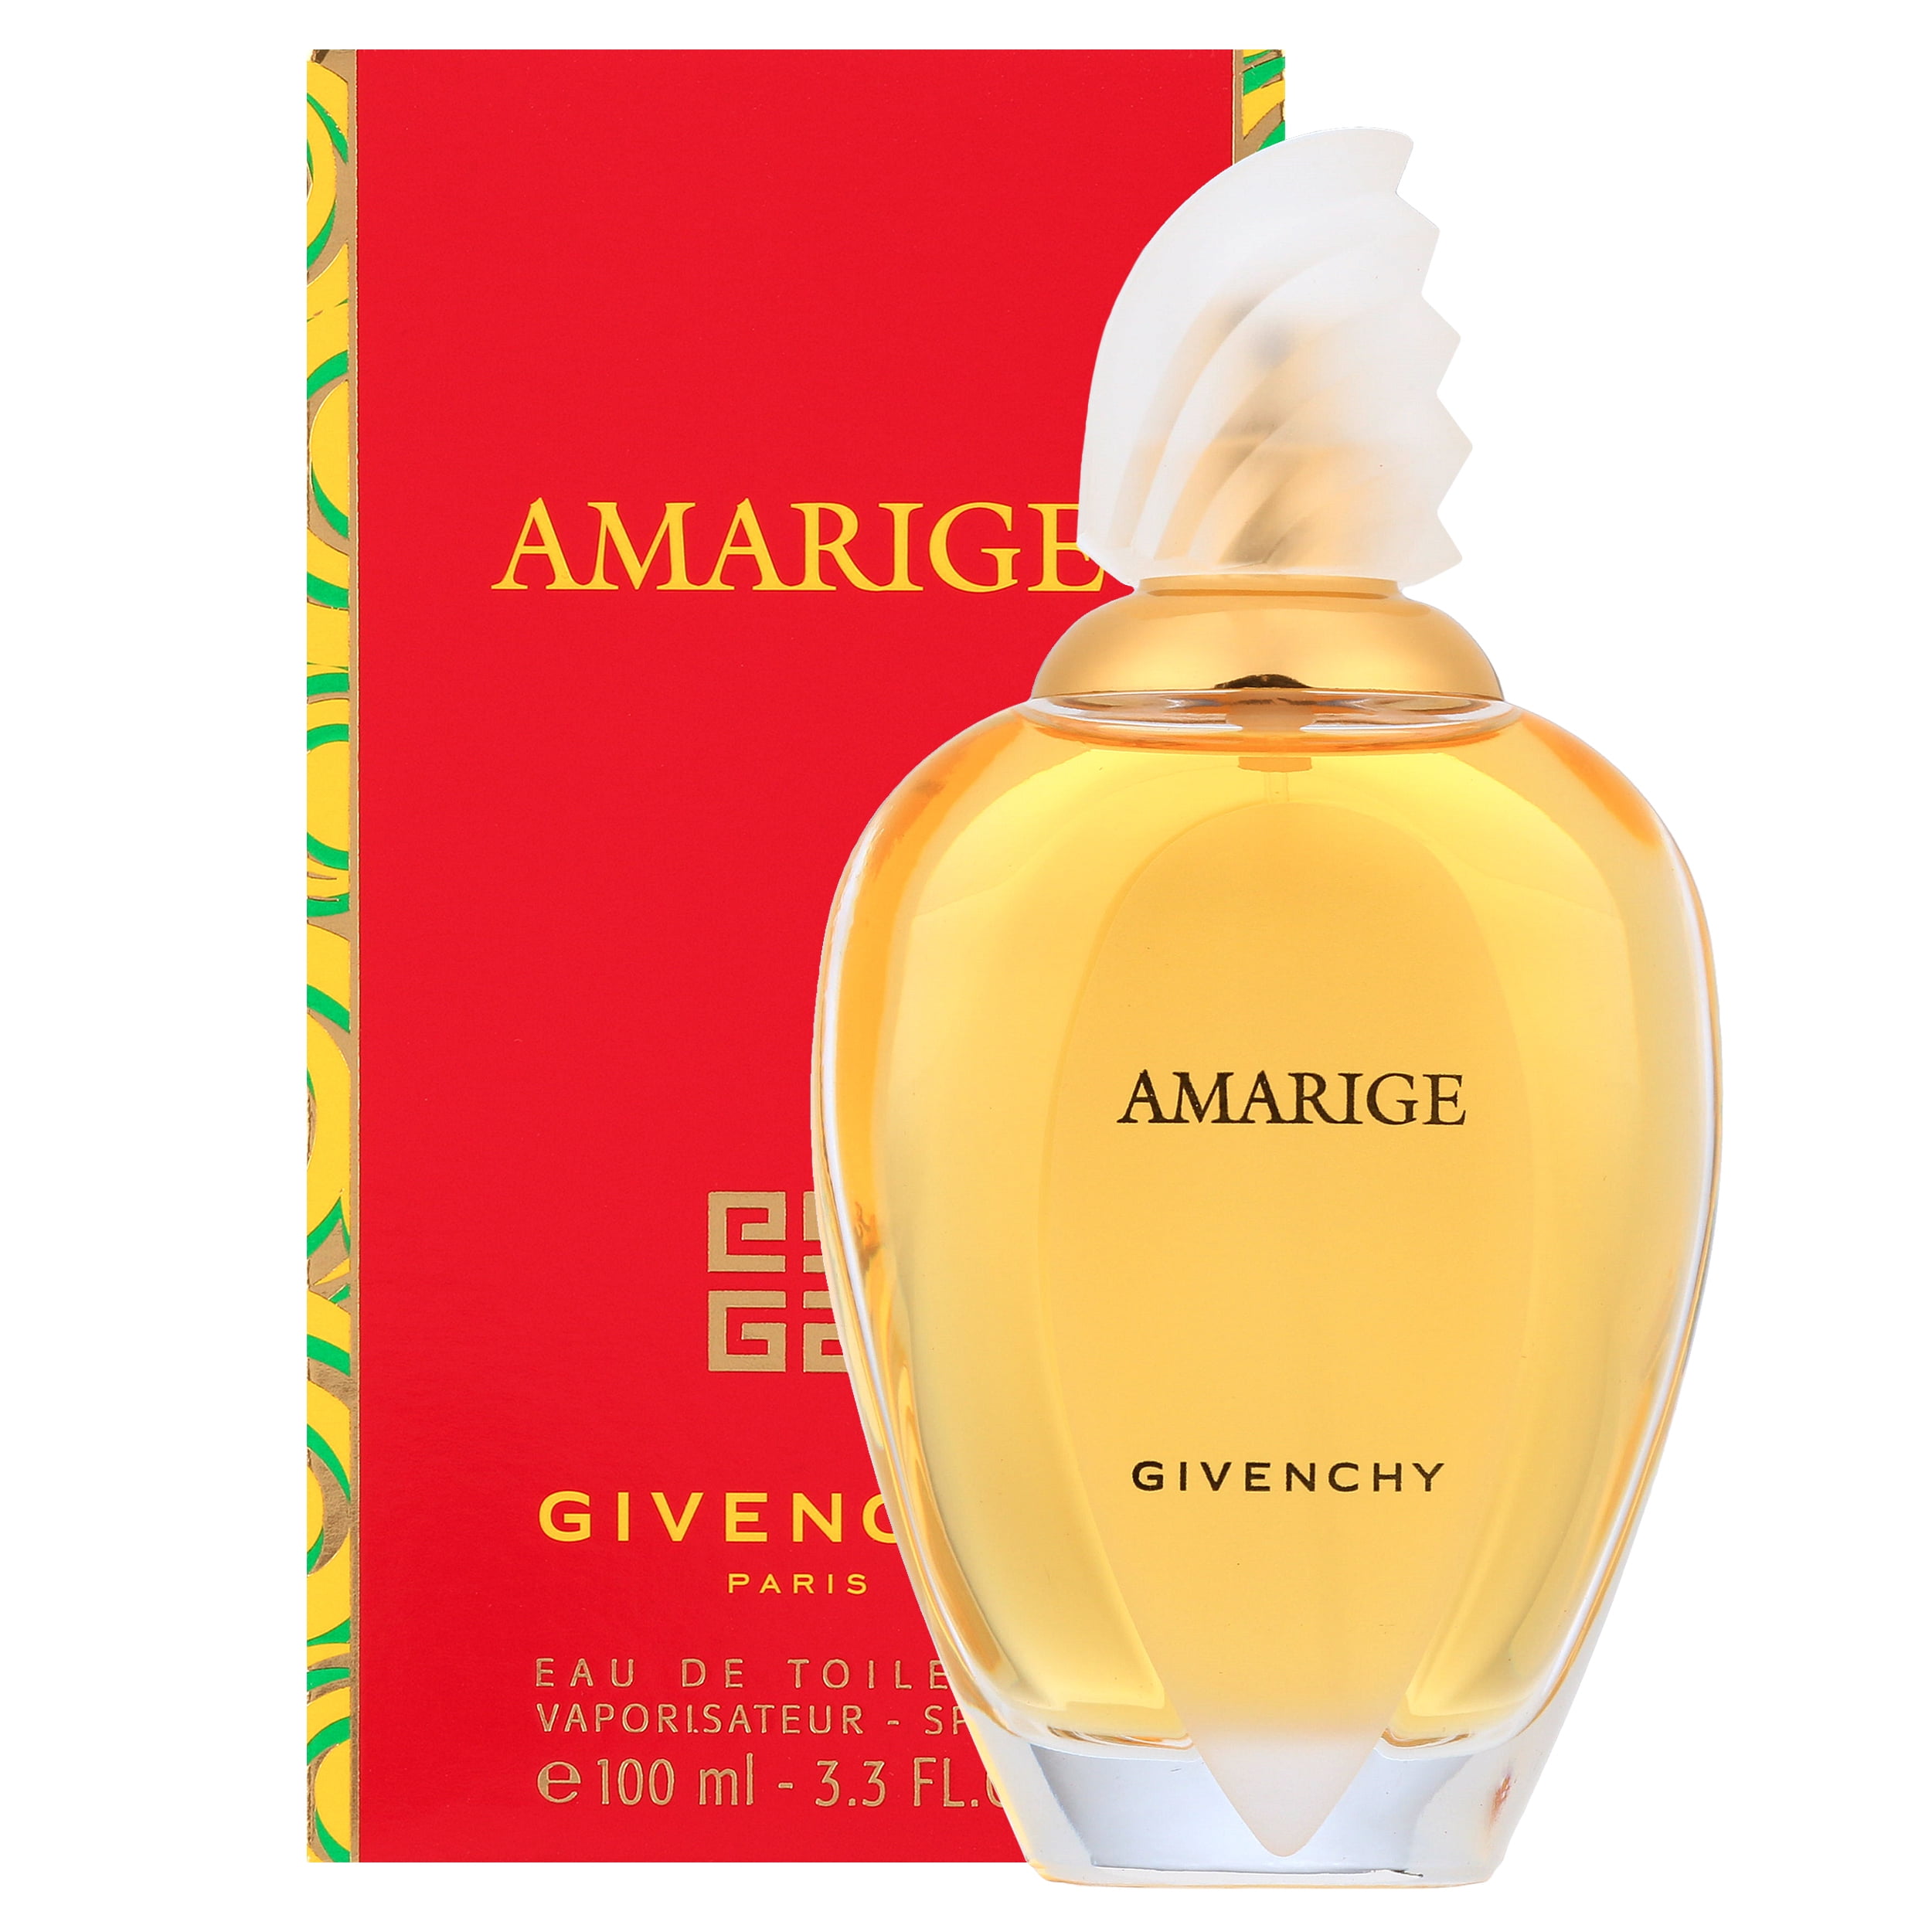 Givenchy Amarige Eau de Toilette Spray, Perfume for Women, 3.3 oz -